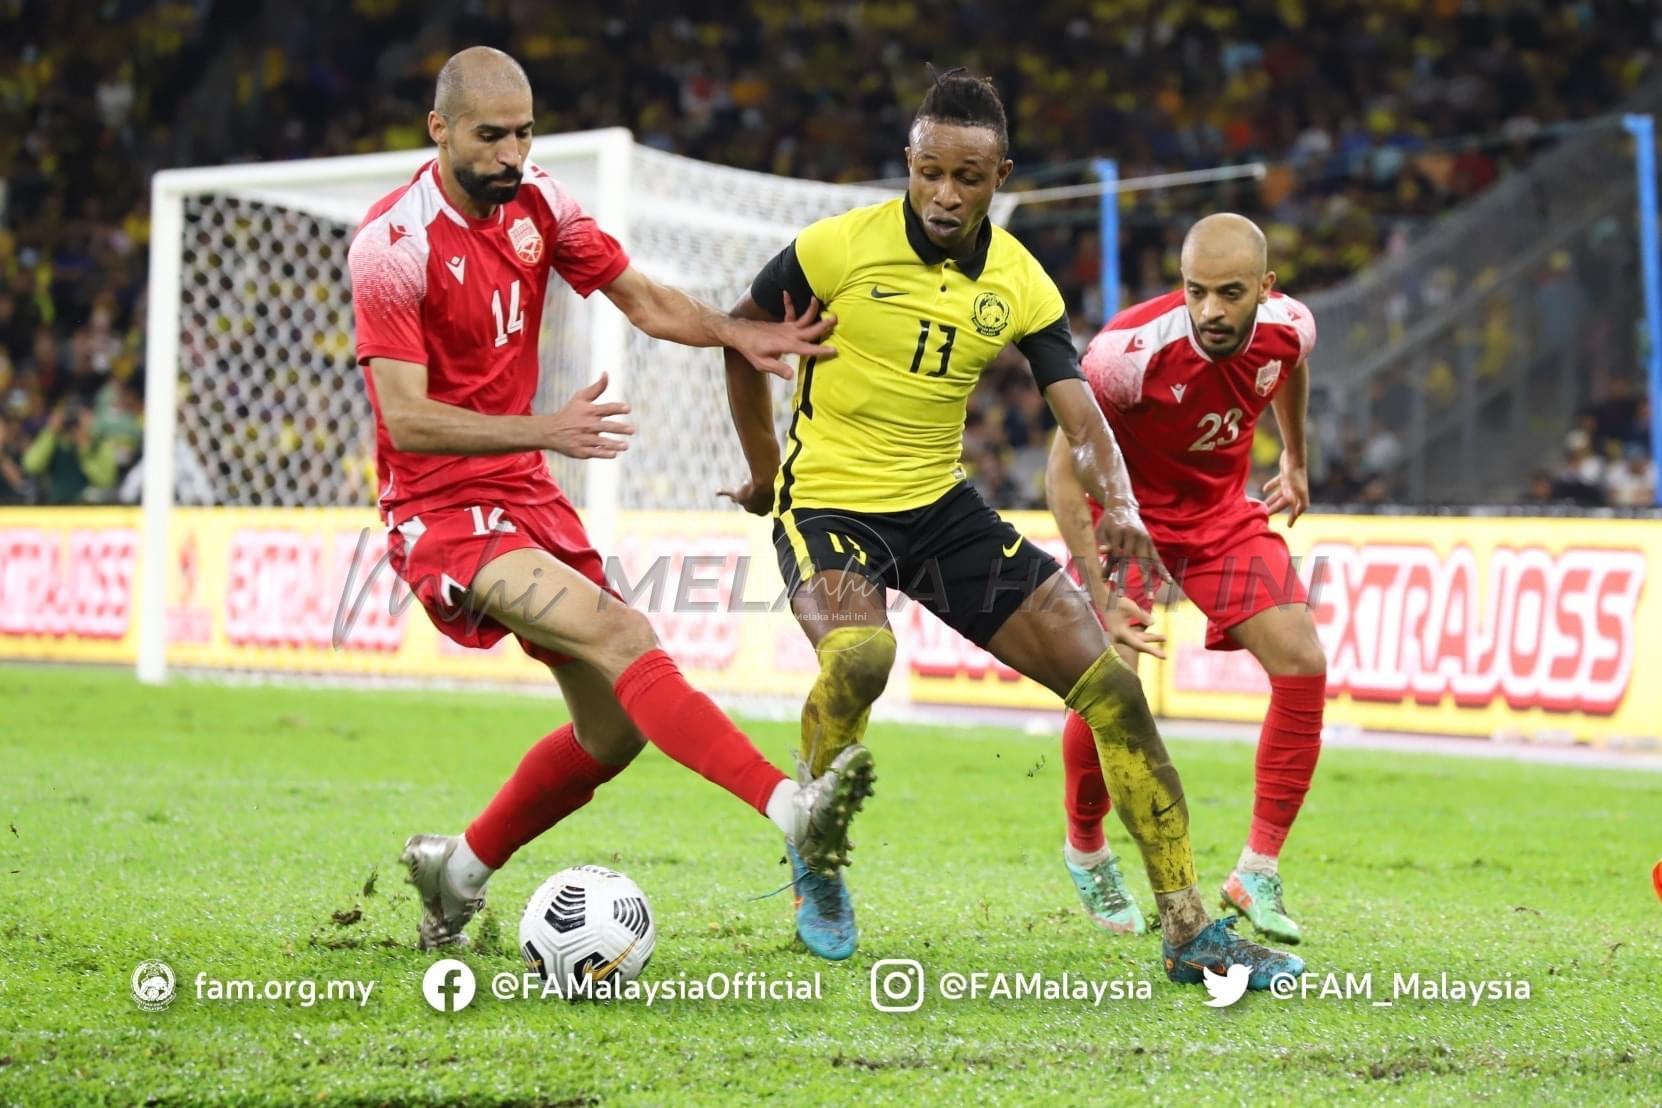 Gol penalti Helal kecewakan skuad Harimau Malaya